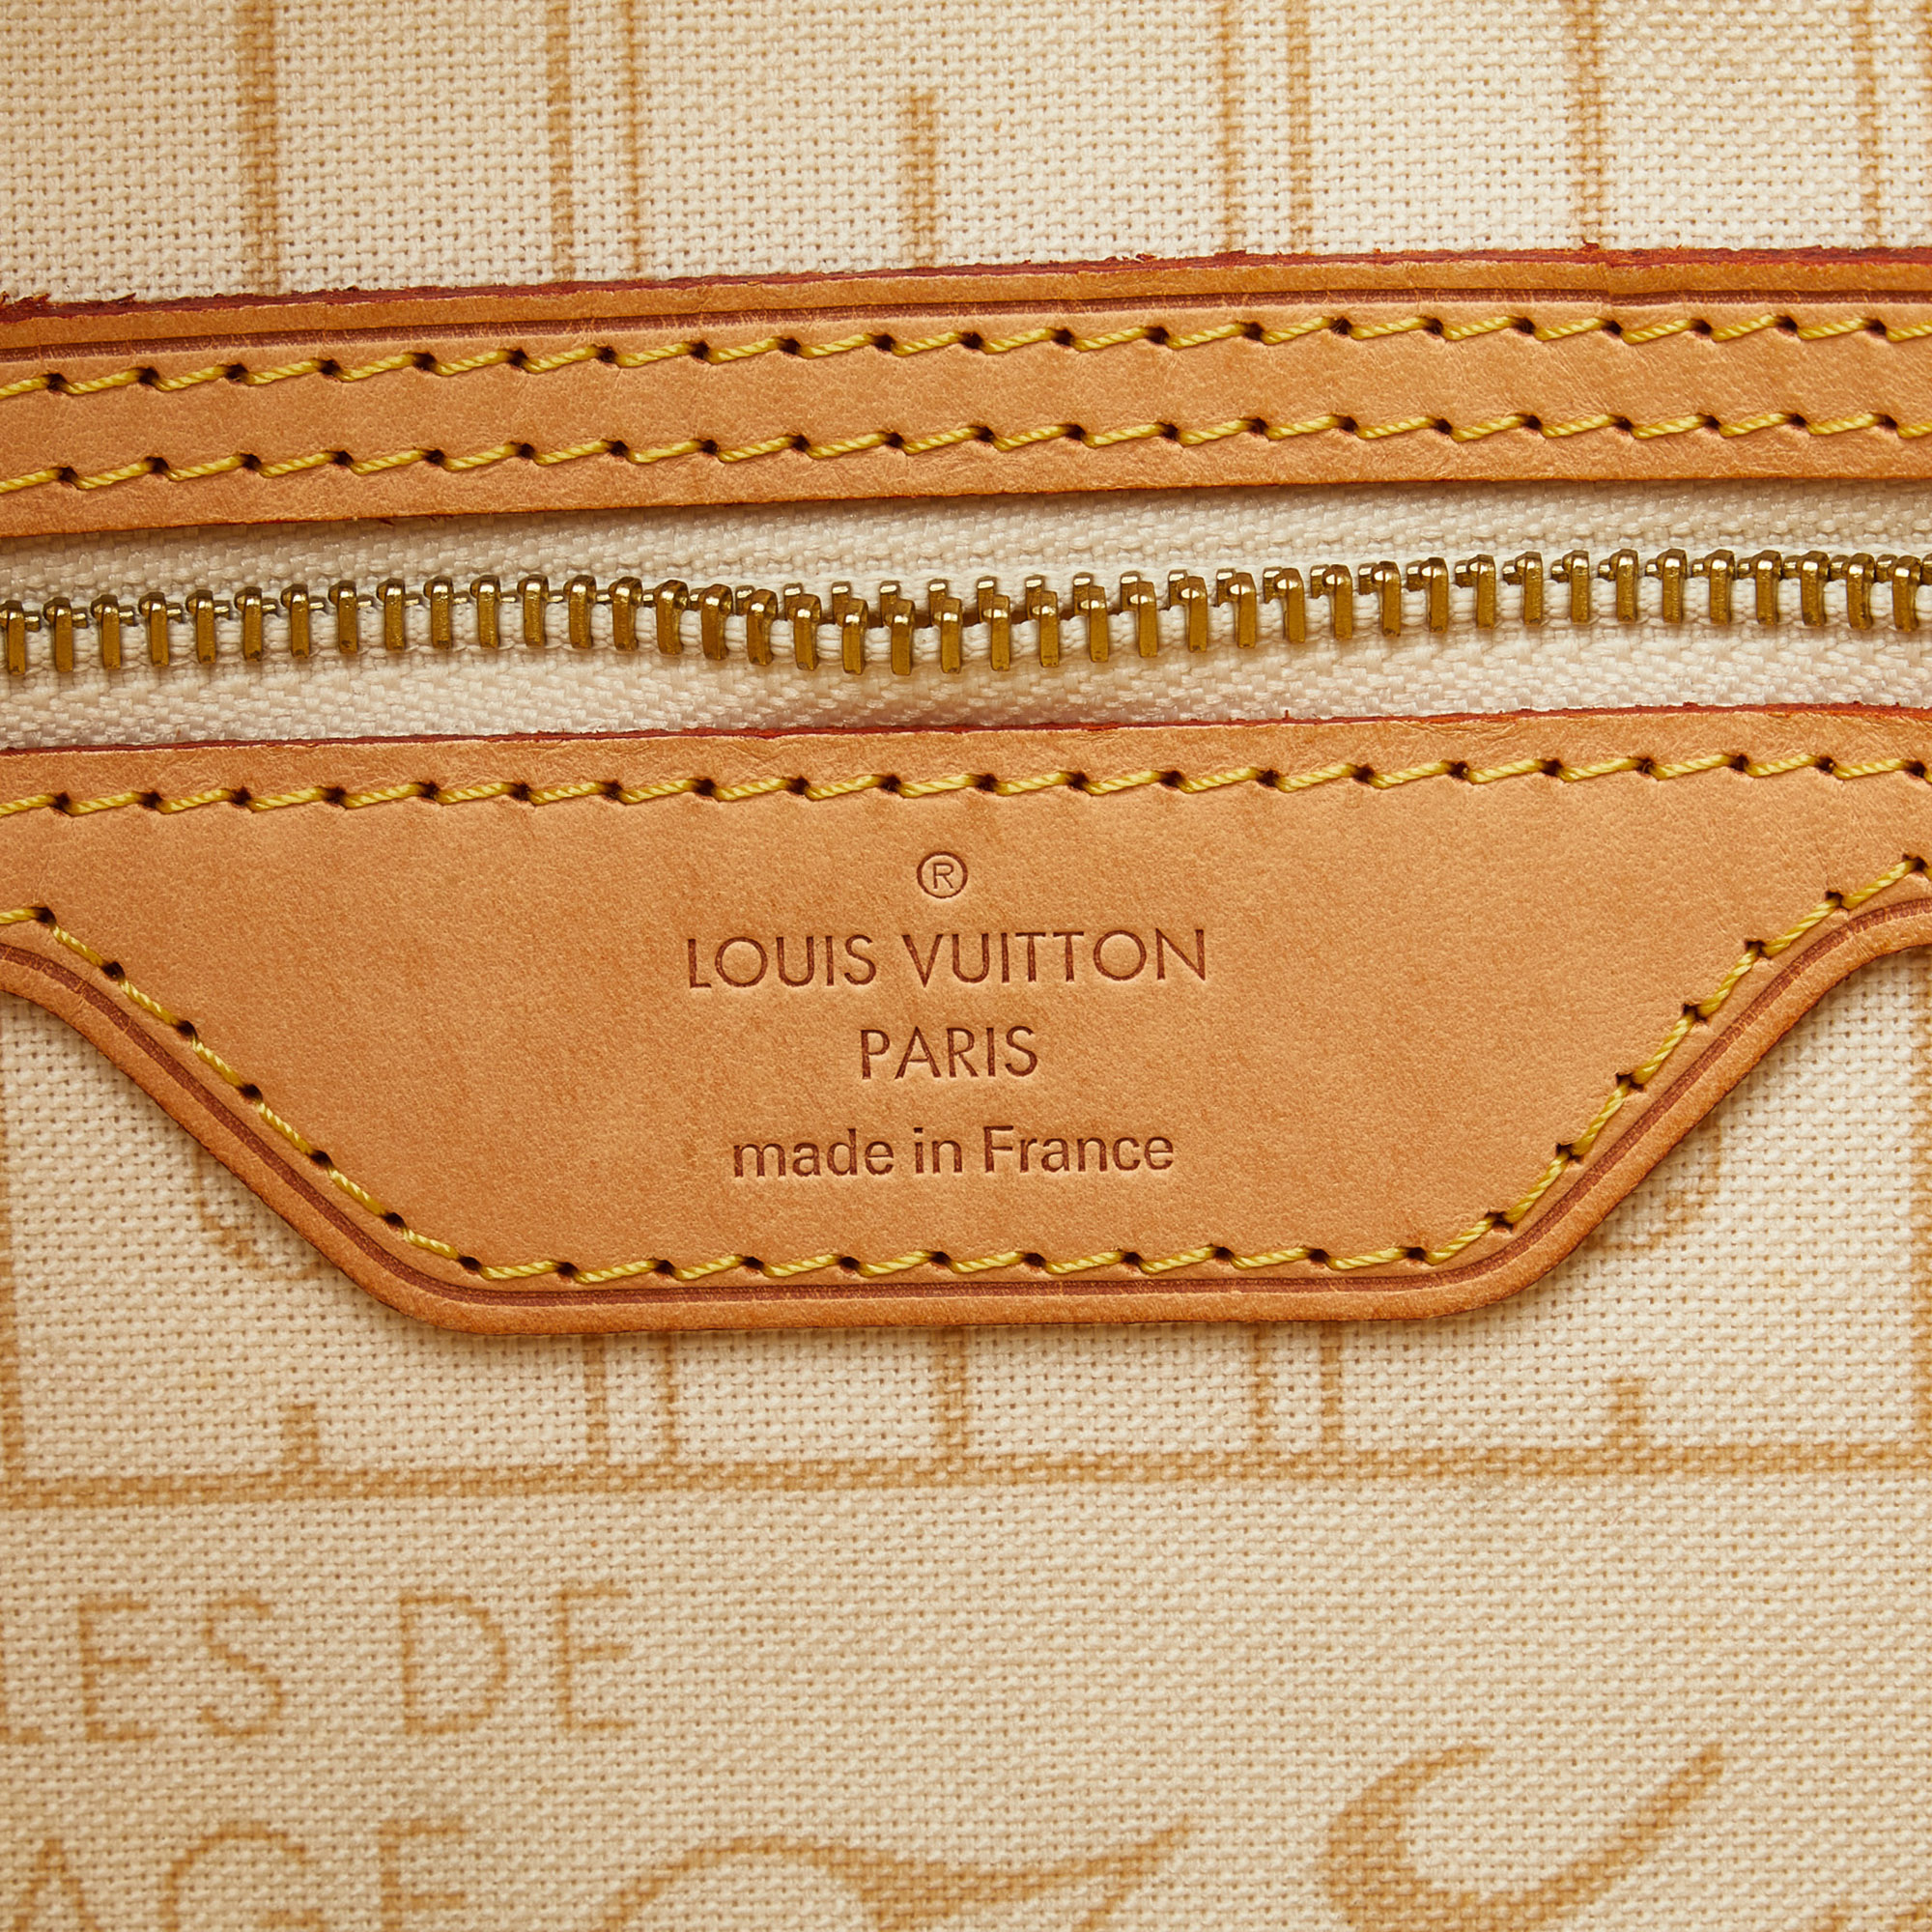 Louis Vuitton Damier Azur Neverfull PM - Image 6 of 14